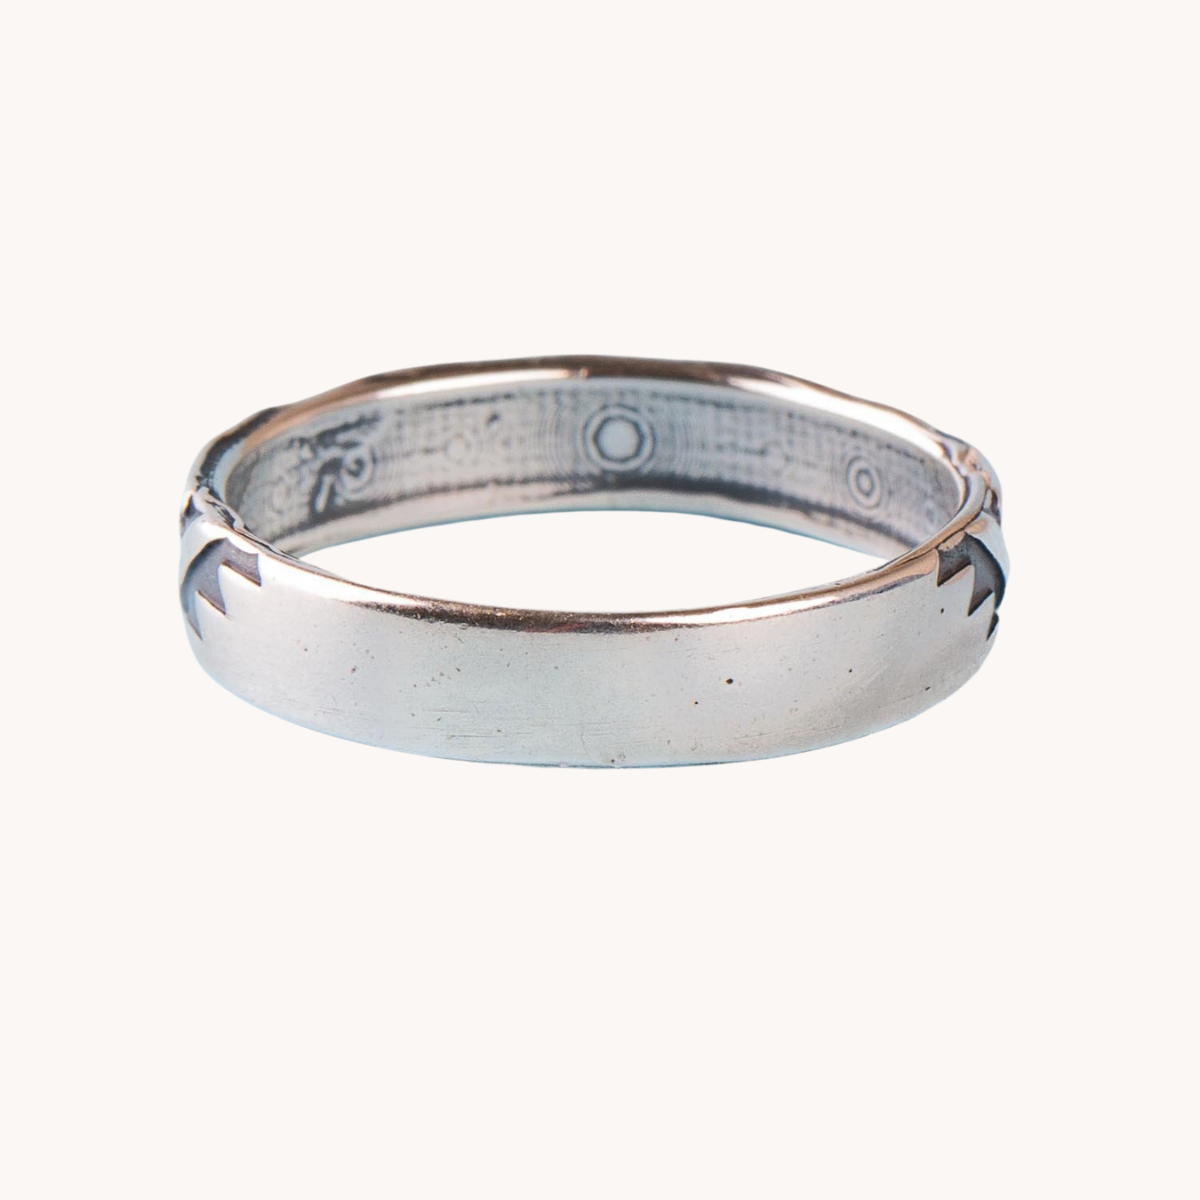 Silver Geometric Ring by TSkies 